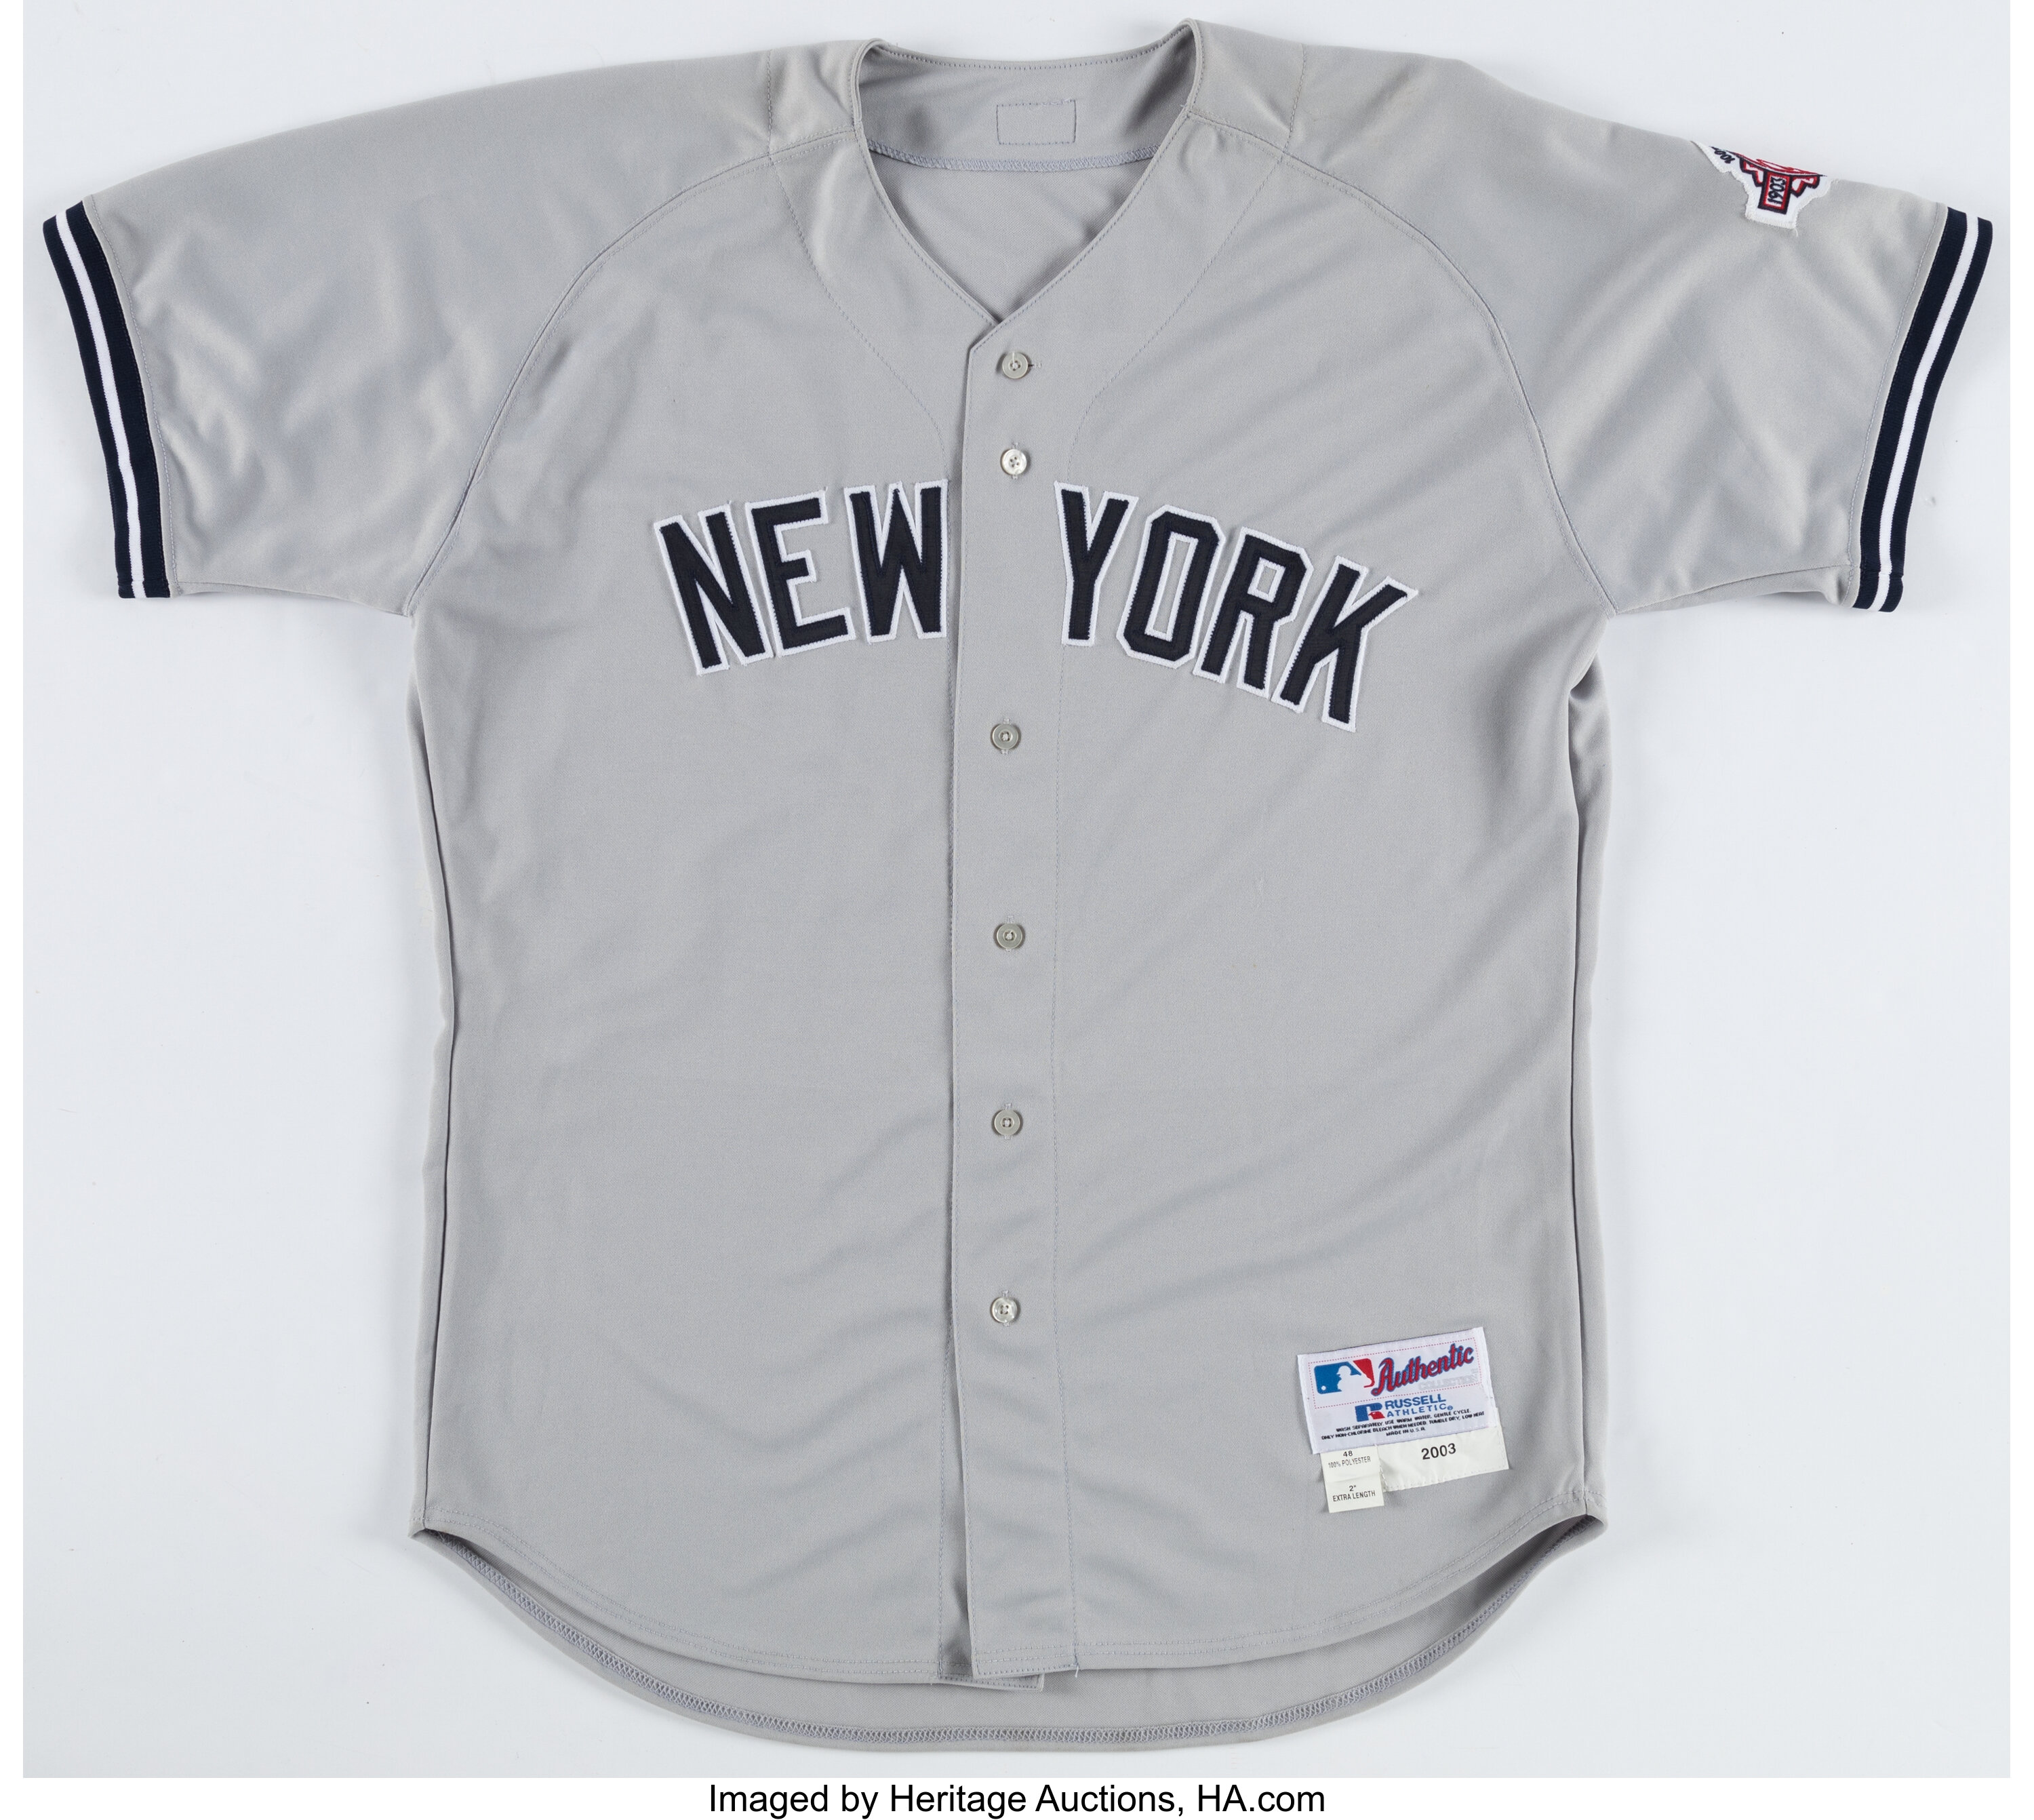 2003 Jorge Posada New York Yankees Team Issued Road Jersey